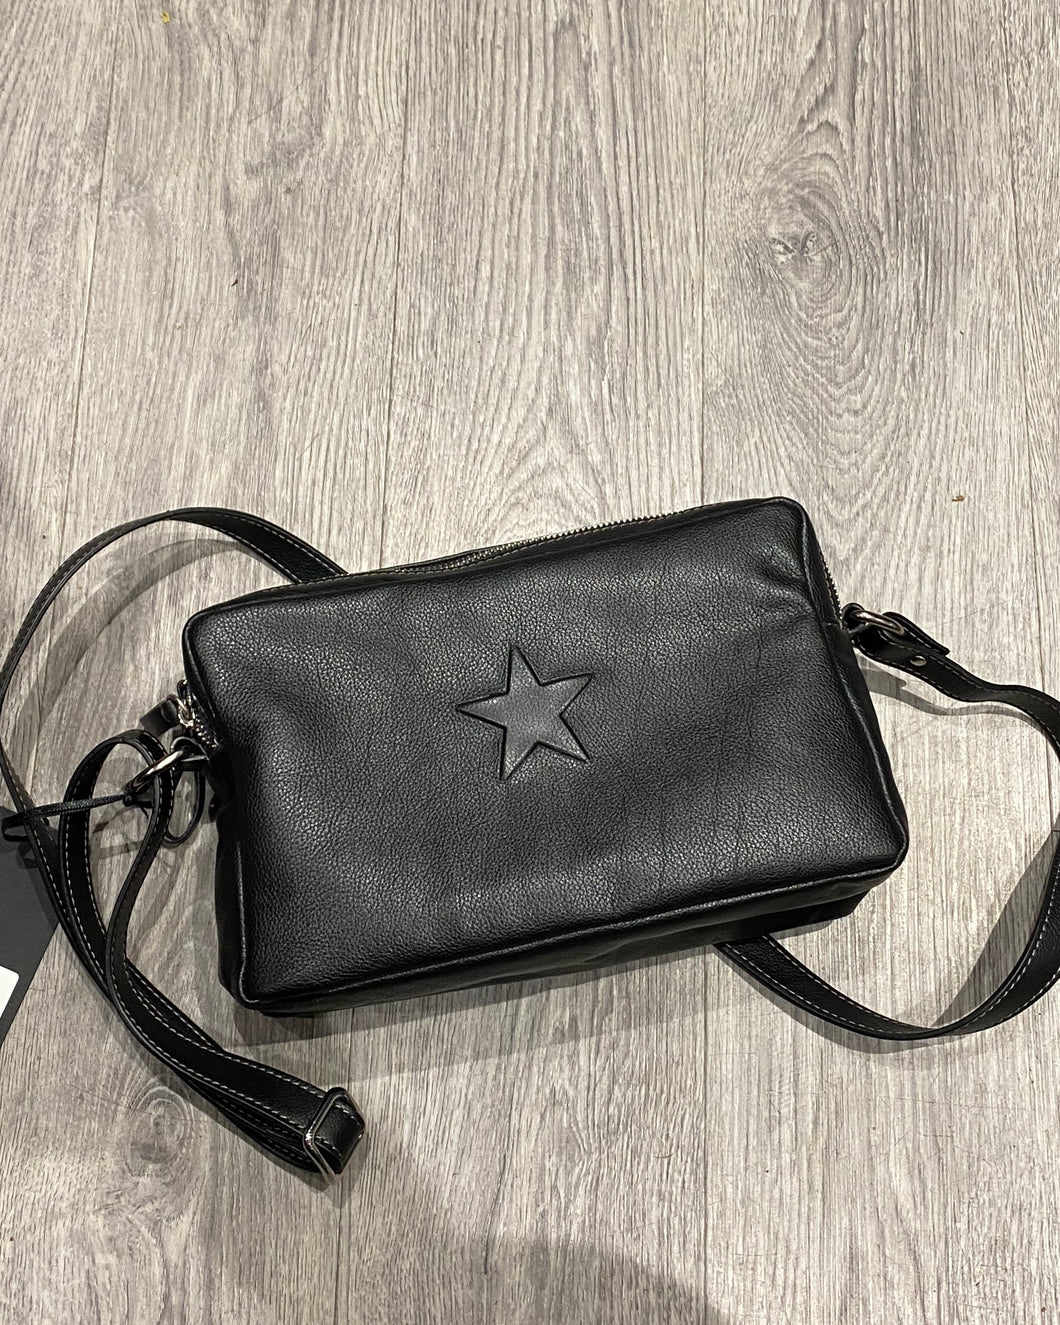 ALEXANDRIA STAR Small Leather Bag